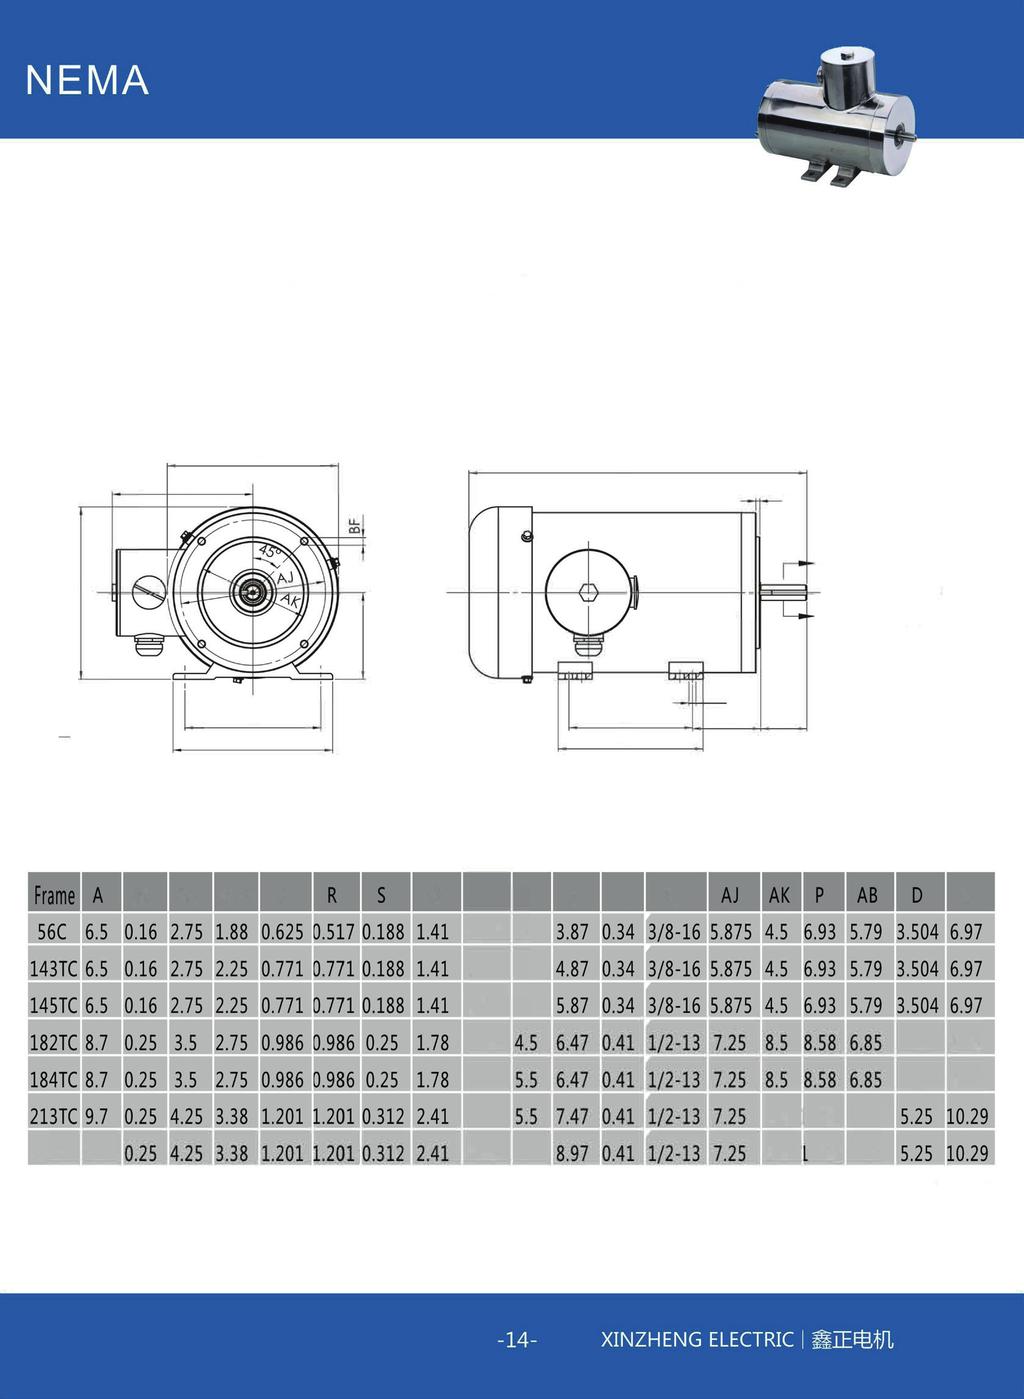 Framesize size toto15tc 15TCTENV TENV Frame SINGLE CAPACITOR. Afmetingen NEMA RVS motoren / Dimensions NEMA CRES motors SINGLE CAPACITOR.